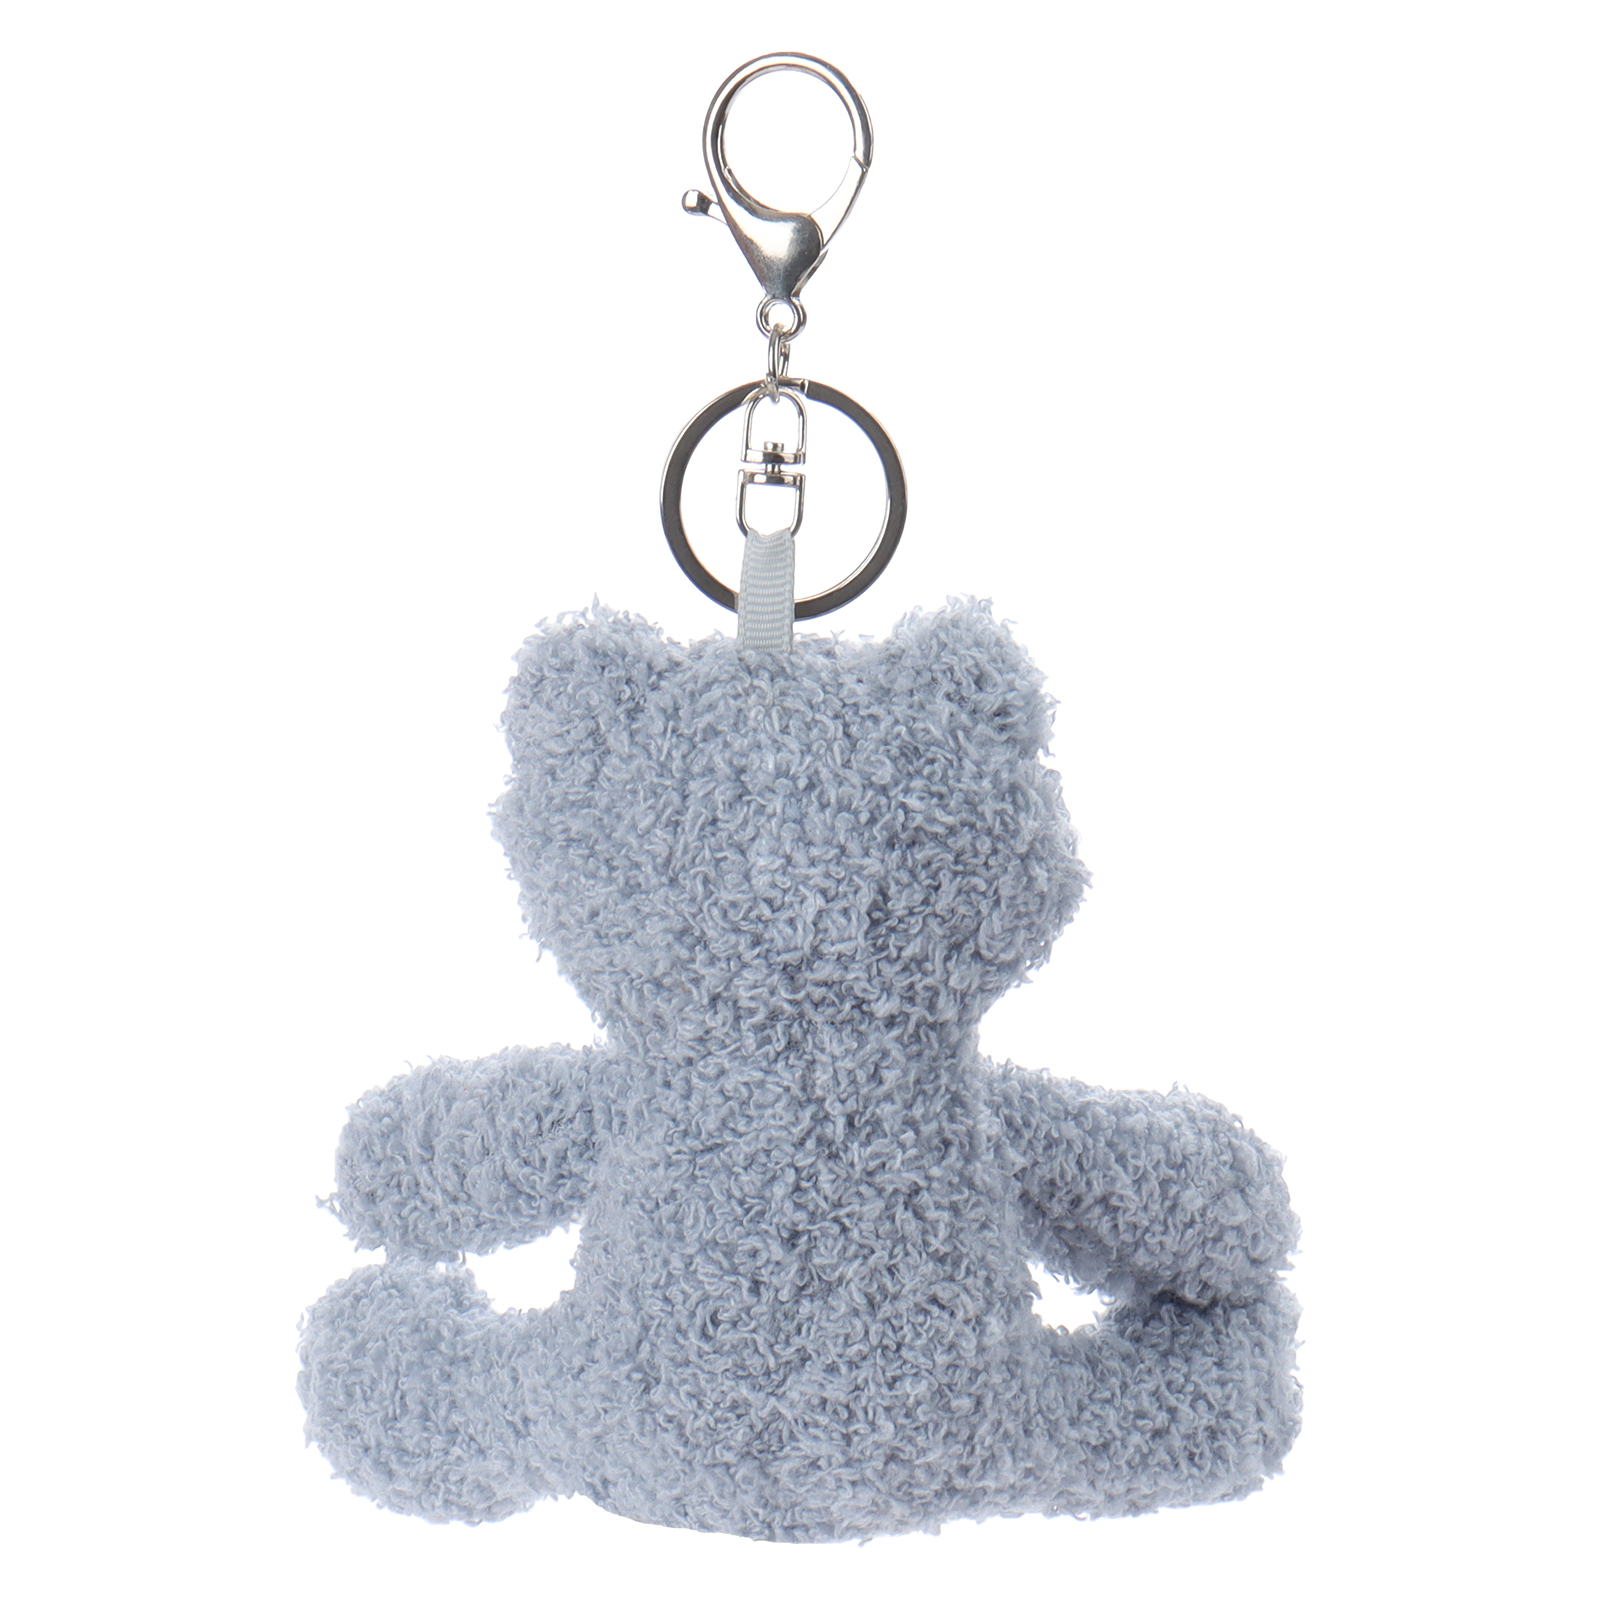 Apricot Lamb Velvet Frog Keychain-Blue Stuffed Animal Soft Plash Keychain